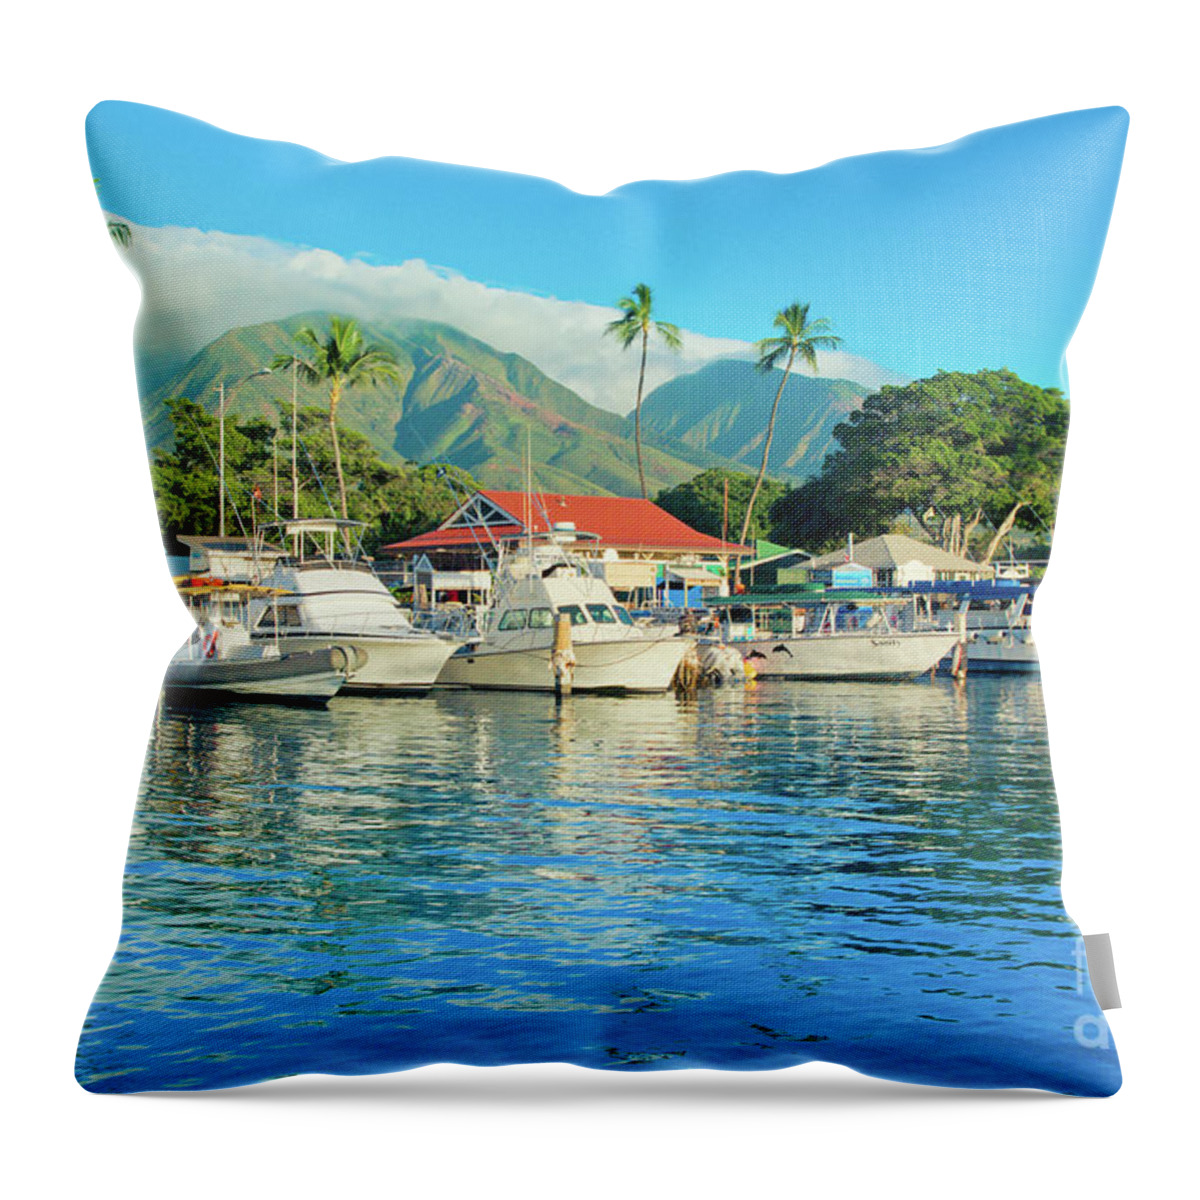 Lahaina Harbour Throw Pillow featuring the photograph Sunset on the Marina Lahaina Harbour Maui Hawaii by Sharon Mau